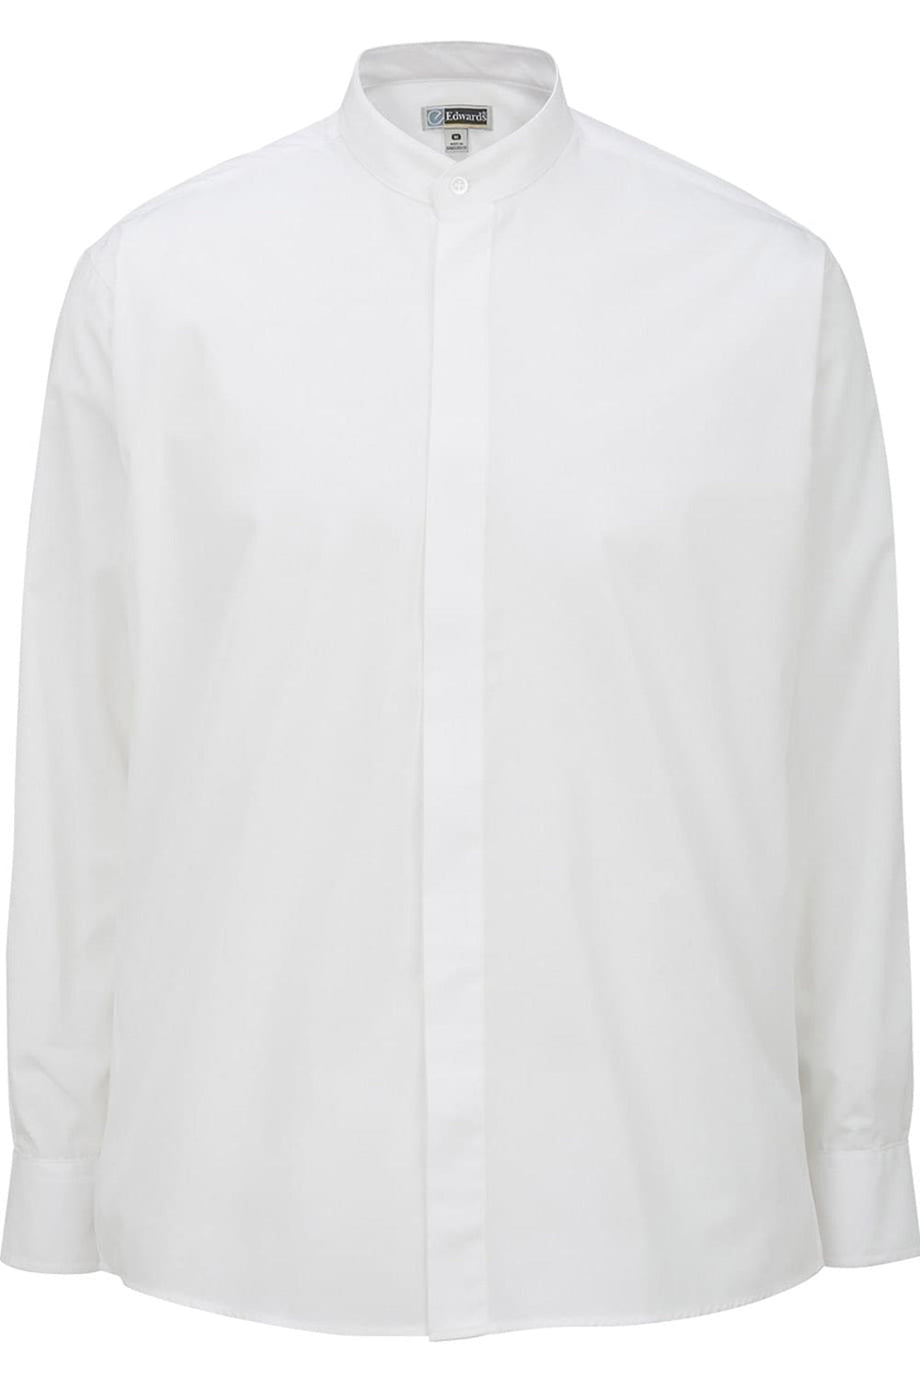 Edwards S / Regular Men's Banded Collar Broadcloth Shirt - White